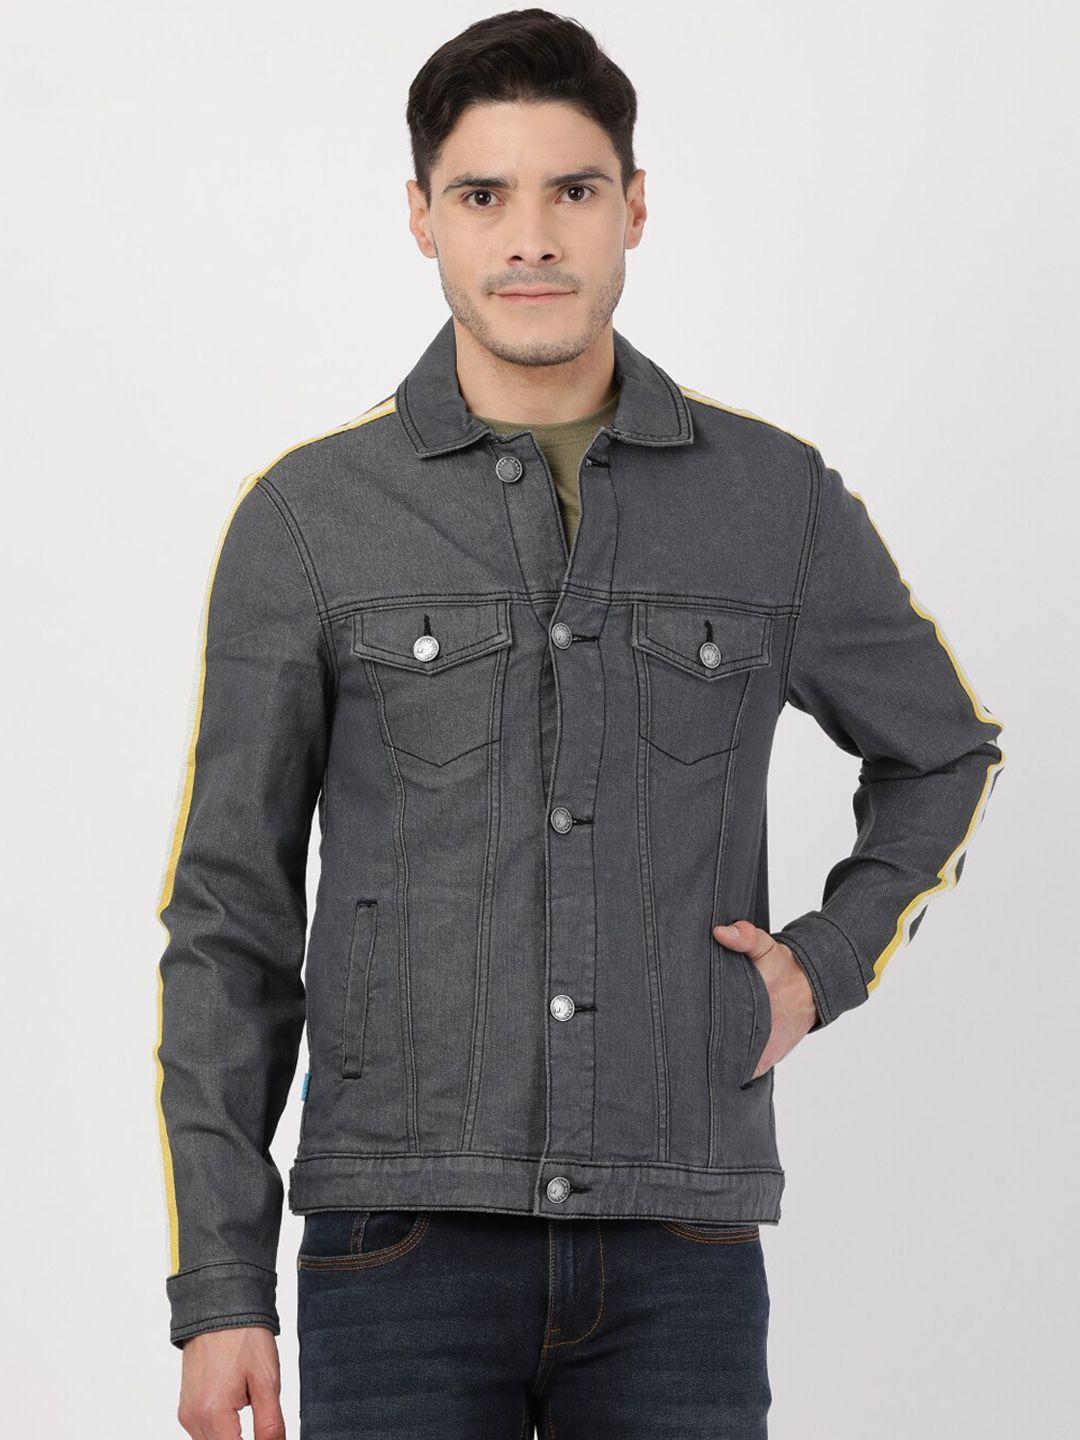 llak jeans men charcoal washed denim jacket with patchwork